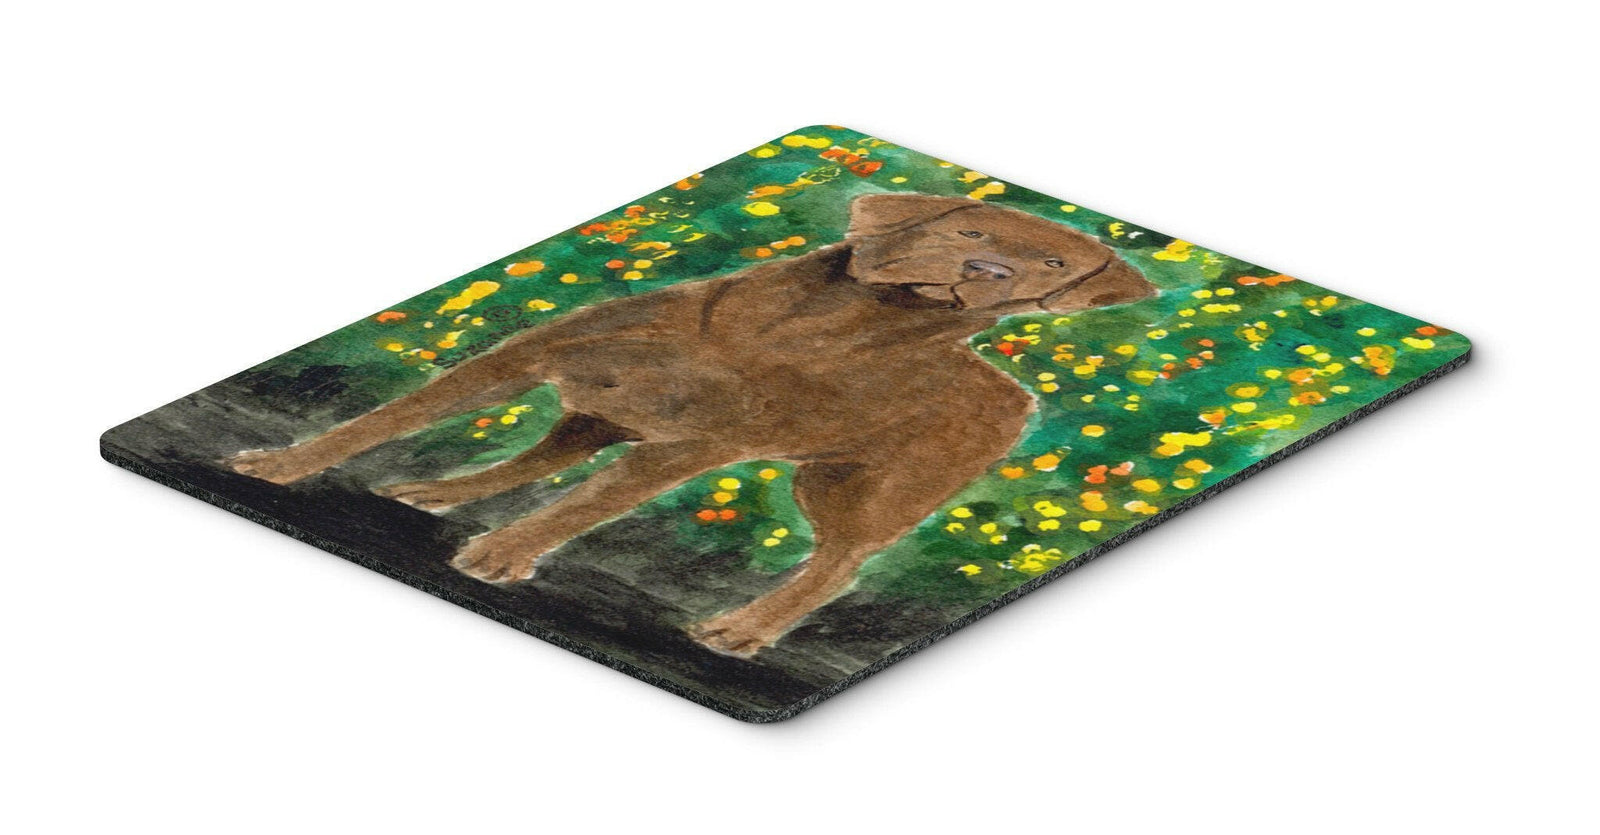 Chesapeake Bay Retriever Mouse Pad / Hot Pad / Trivet by Caroline's Treasures